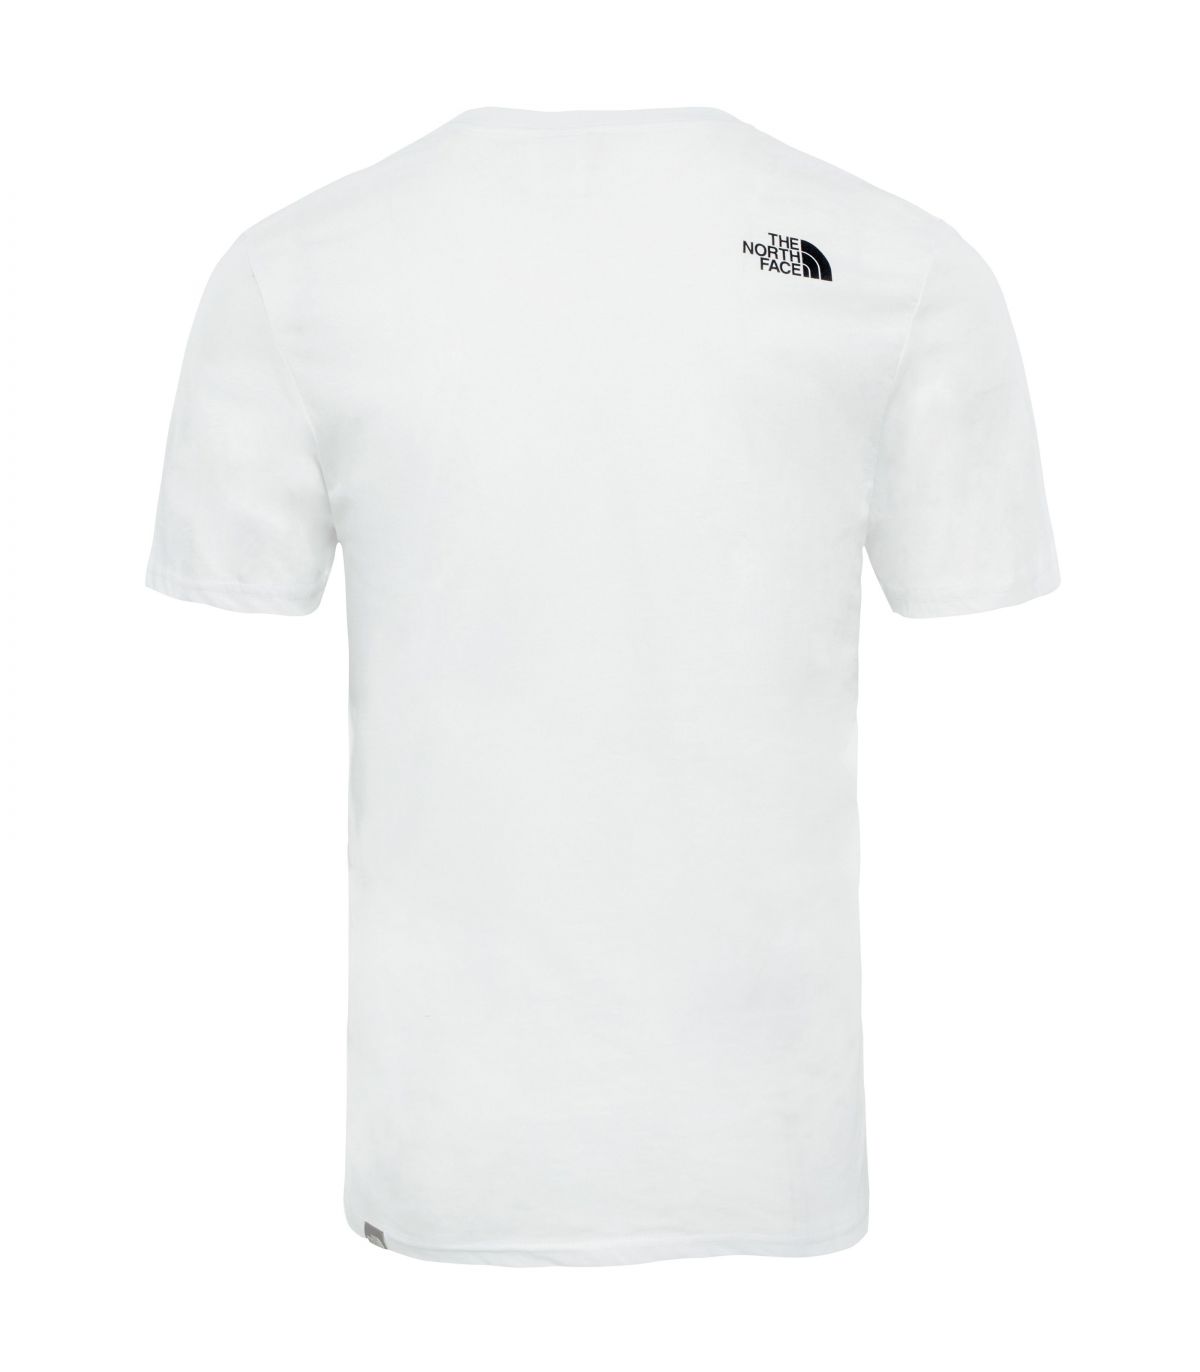 Camiseta The North Face Easy Tee White. Oferta y Comprar